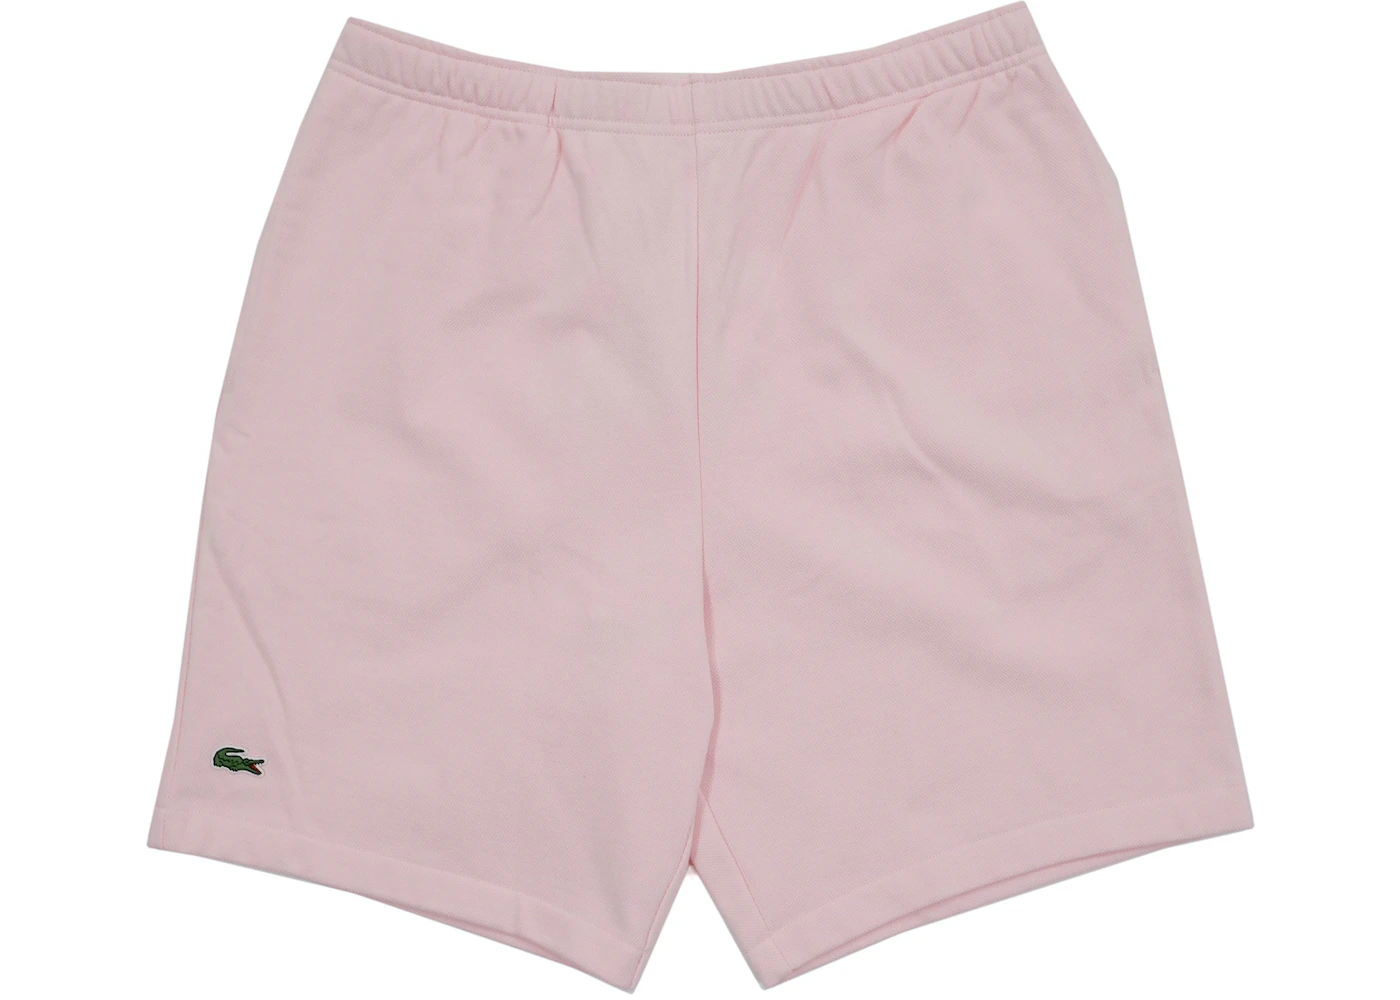 Supreme Lacoste Pique Short Light Pink Men's - SS17 - US